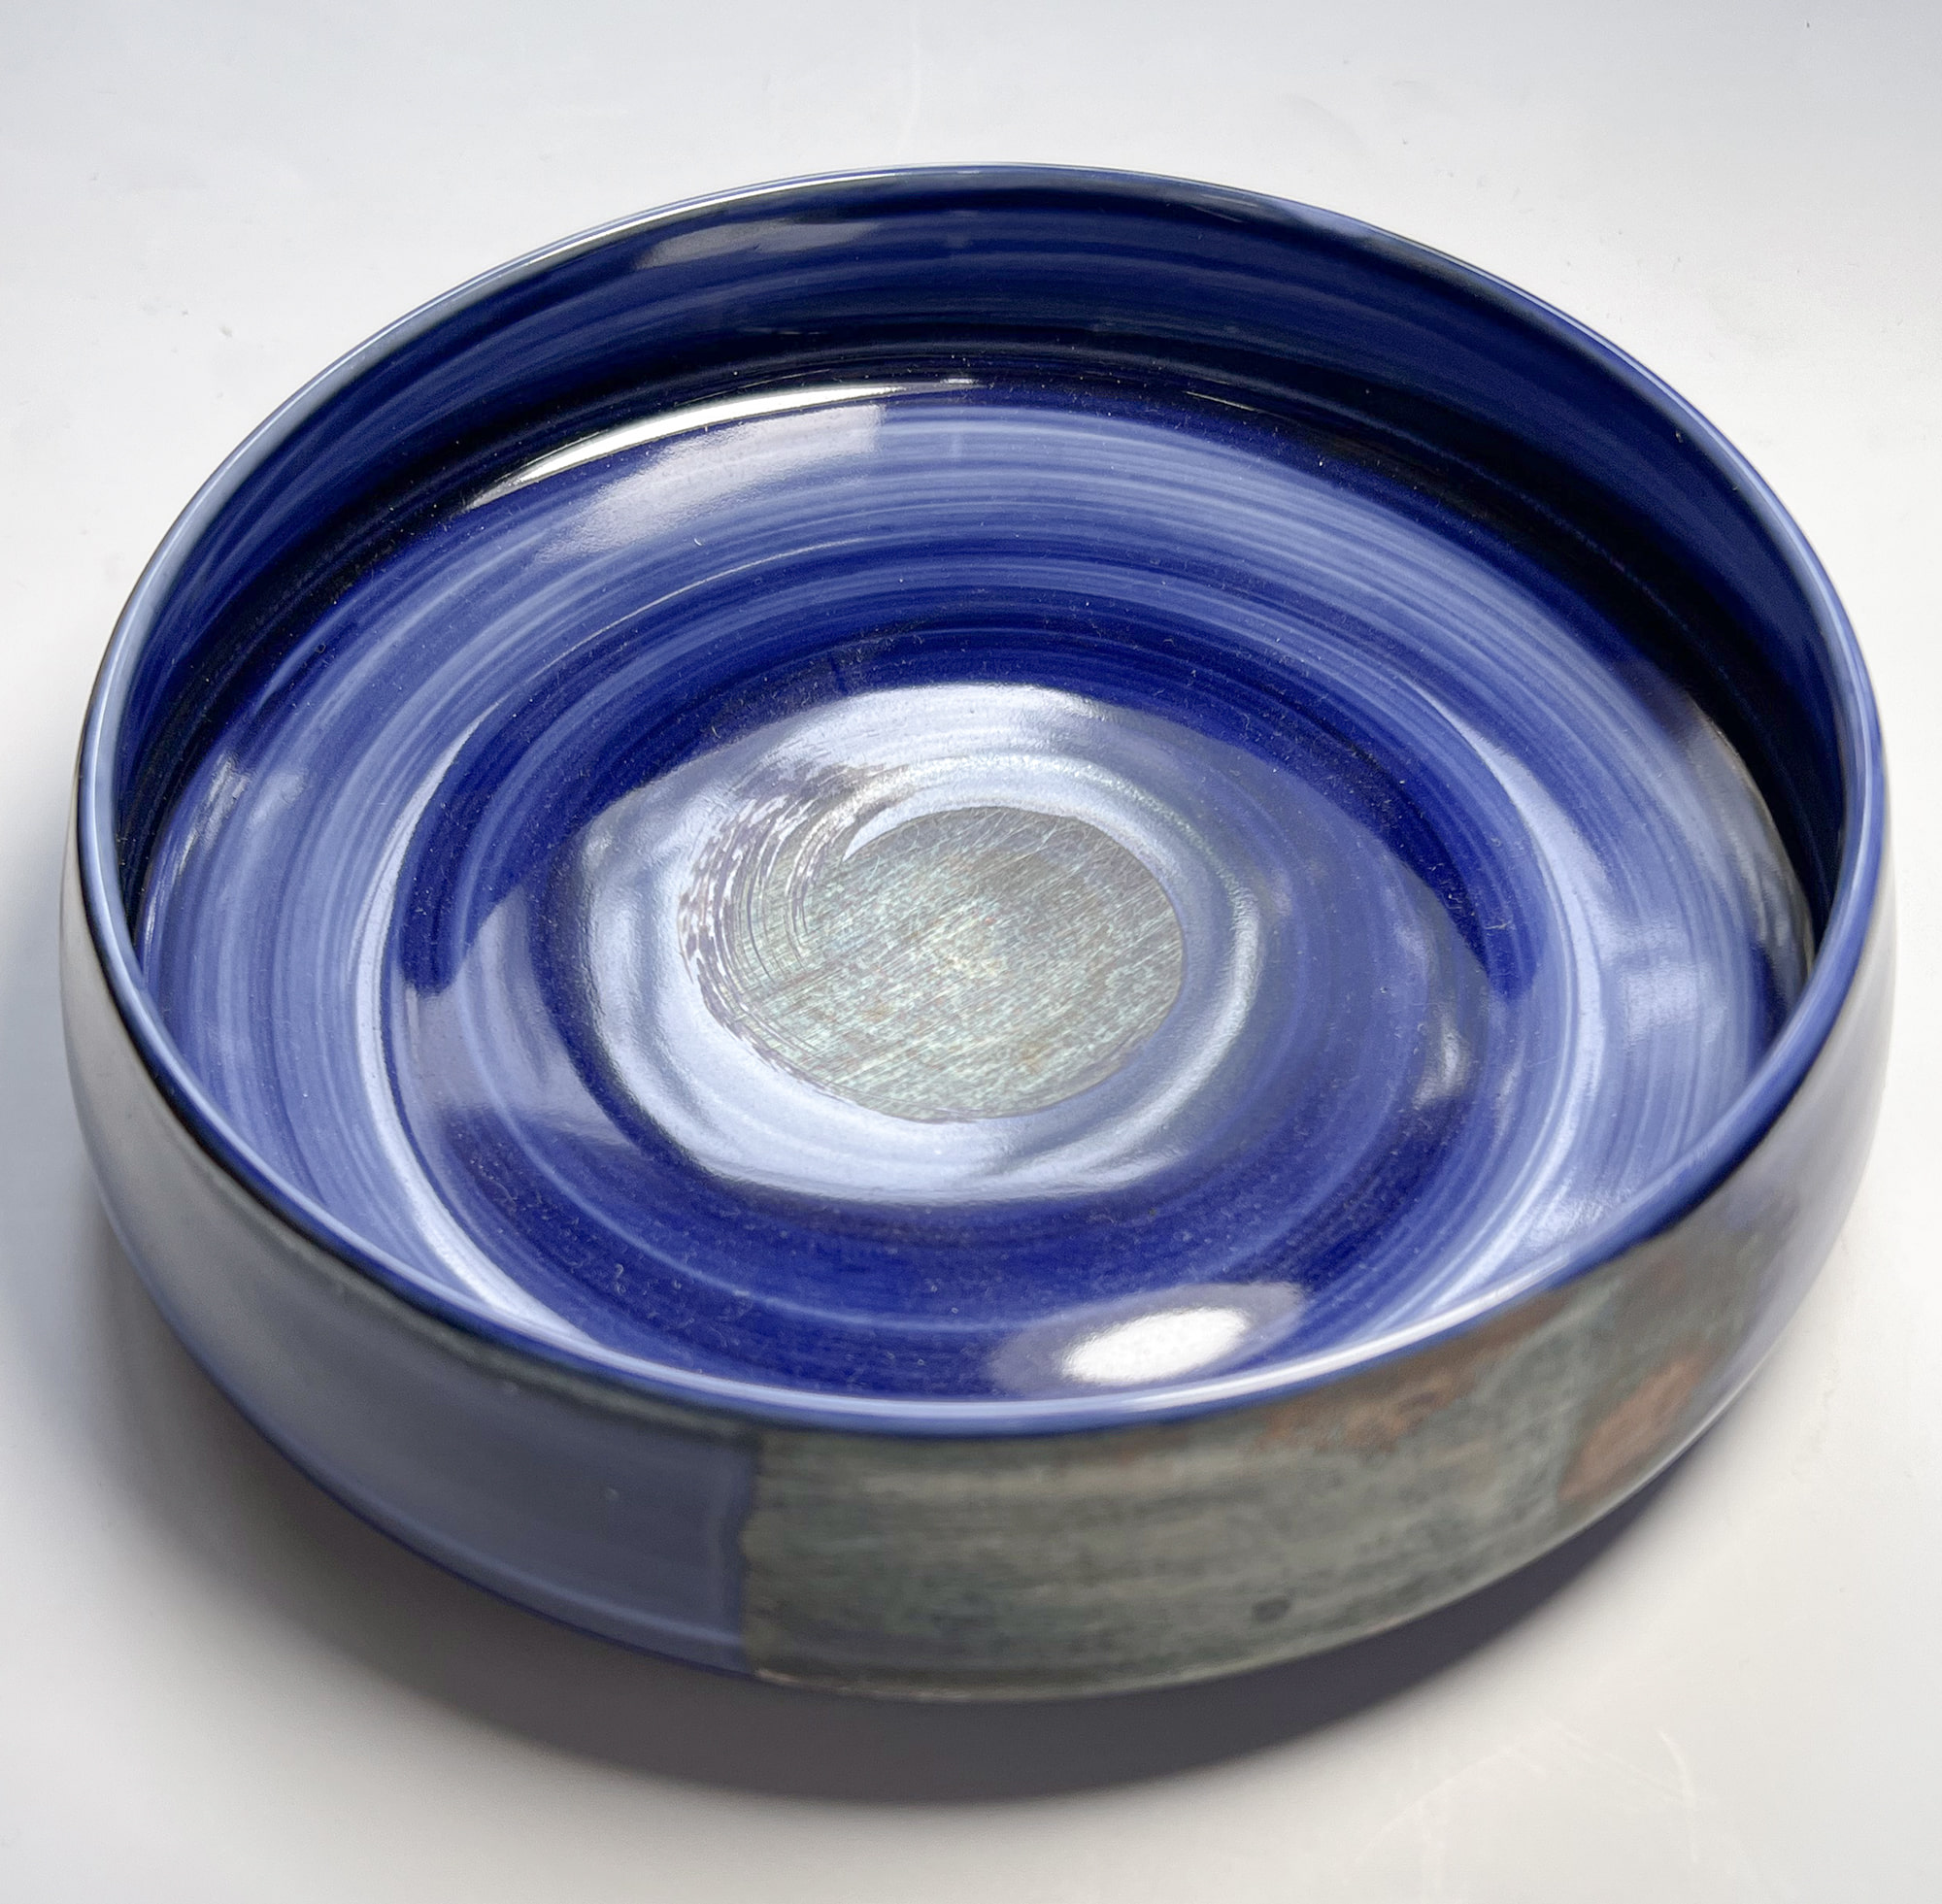 od0204-043/파란색 볼/Φ17x4cm/일본그릇